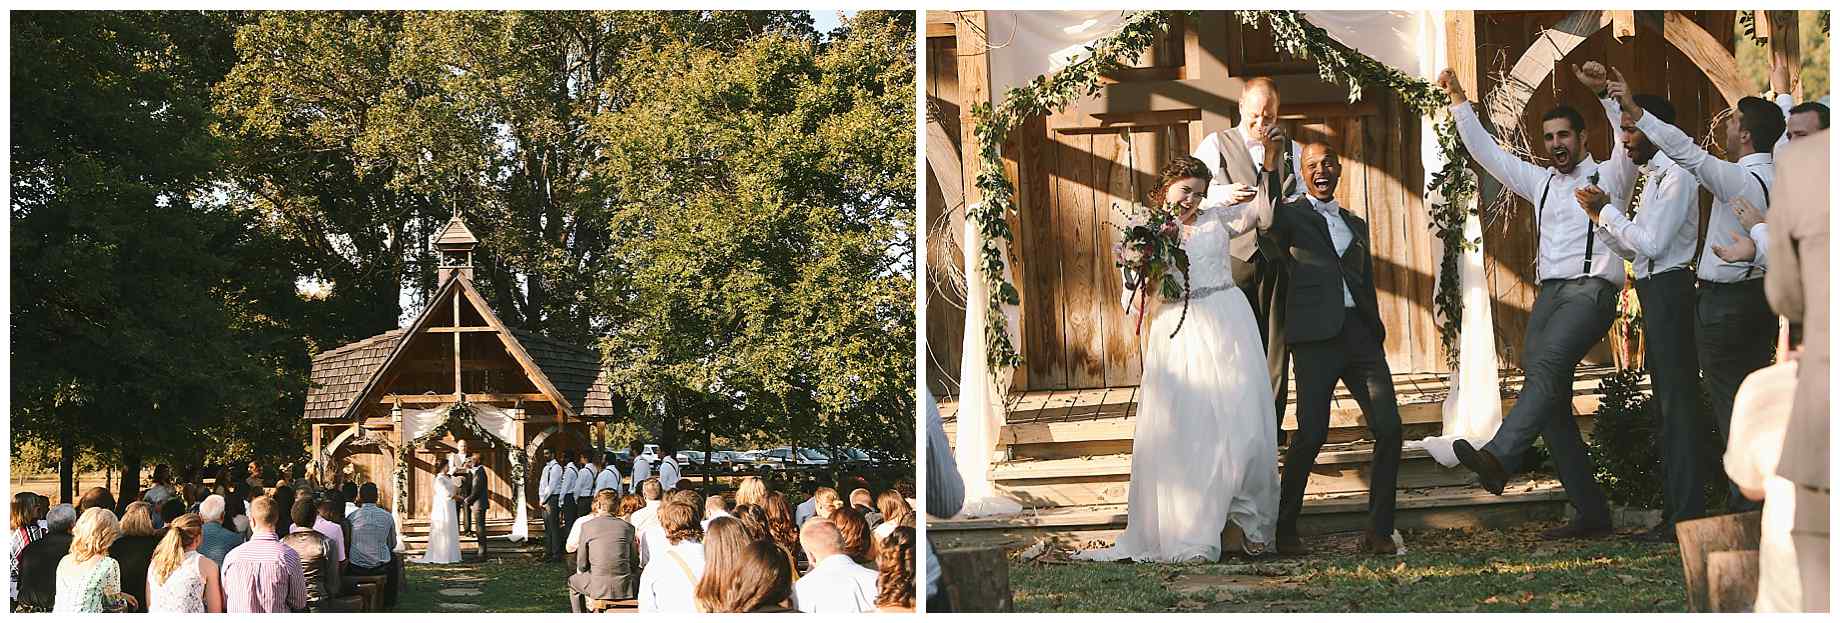 stone-oak-ranch-wedding-003